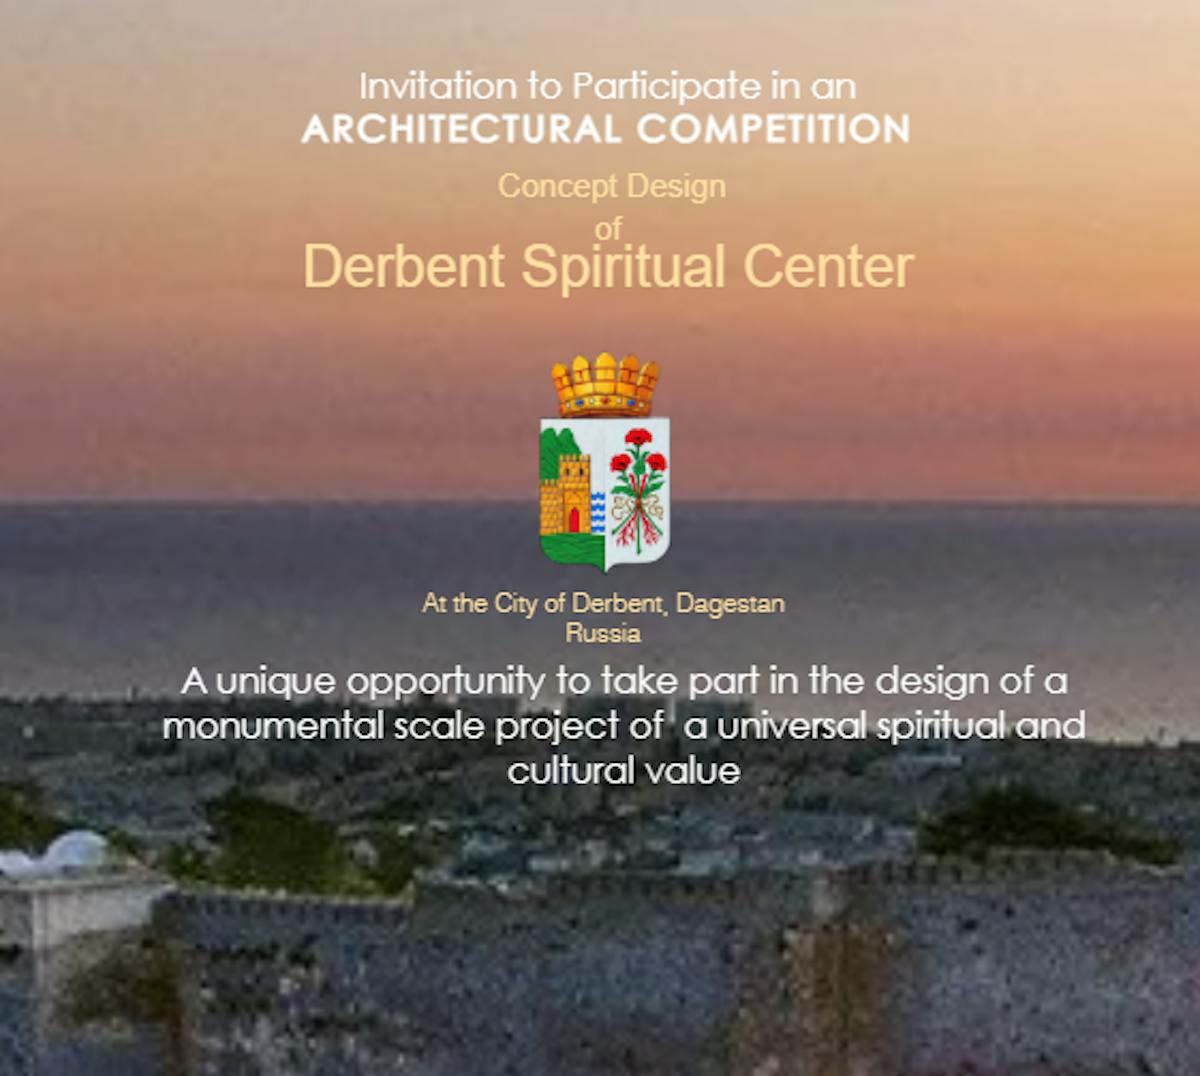 Concept Design of Derbent Spiritual Center